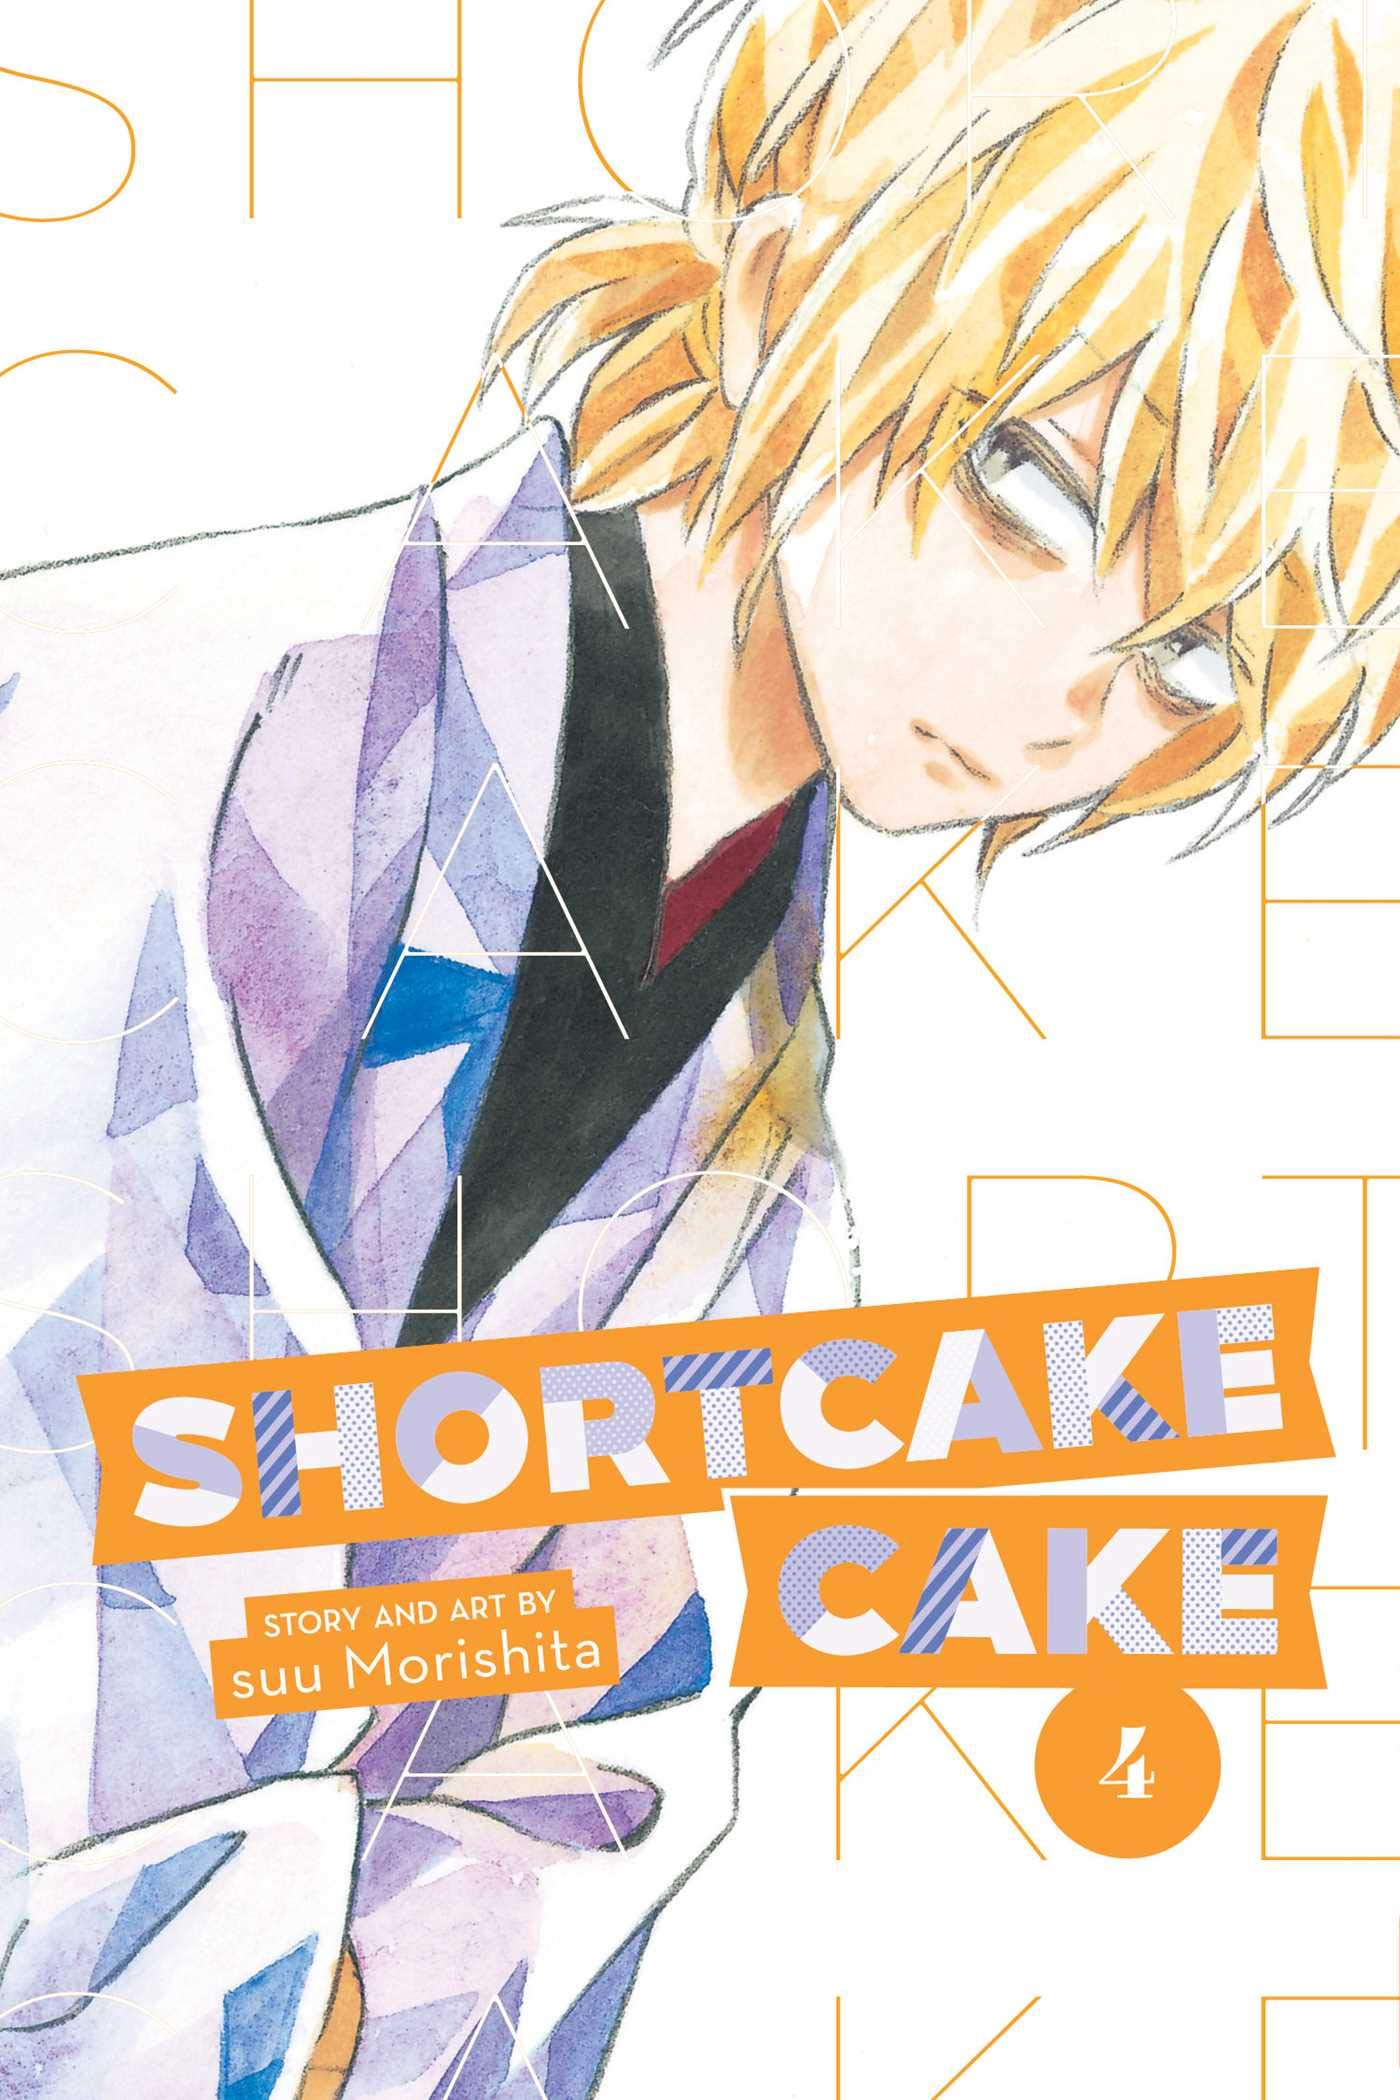 Shortcake Cake - Volume 4